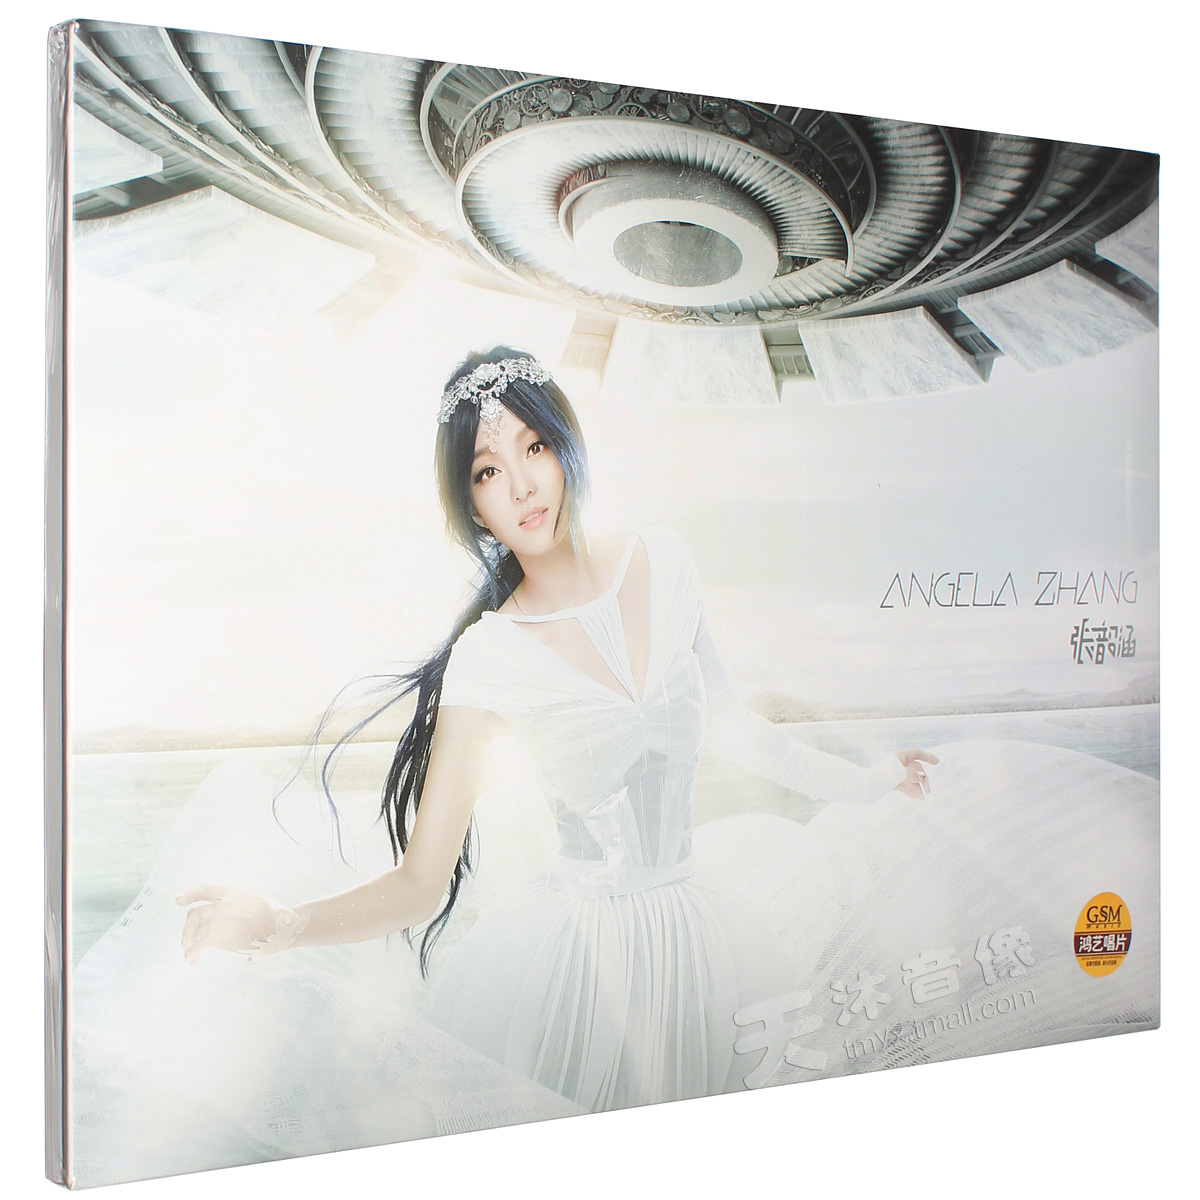 【正版】张韶涵 angela zhang 2014新专辑 CD+写真册